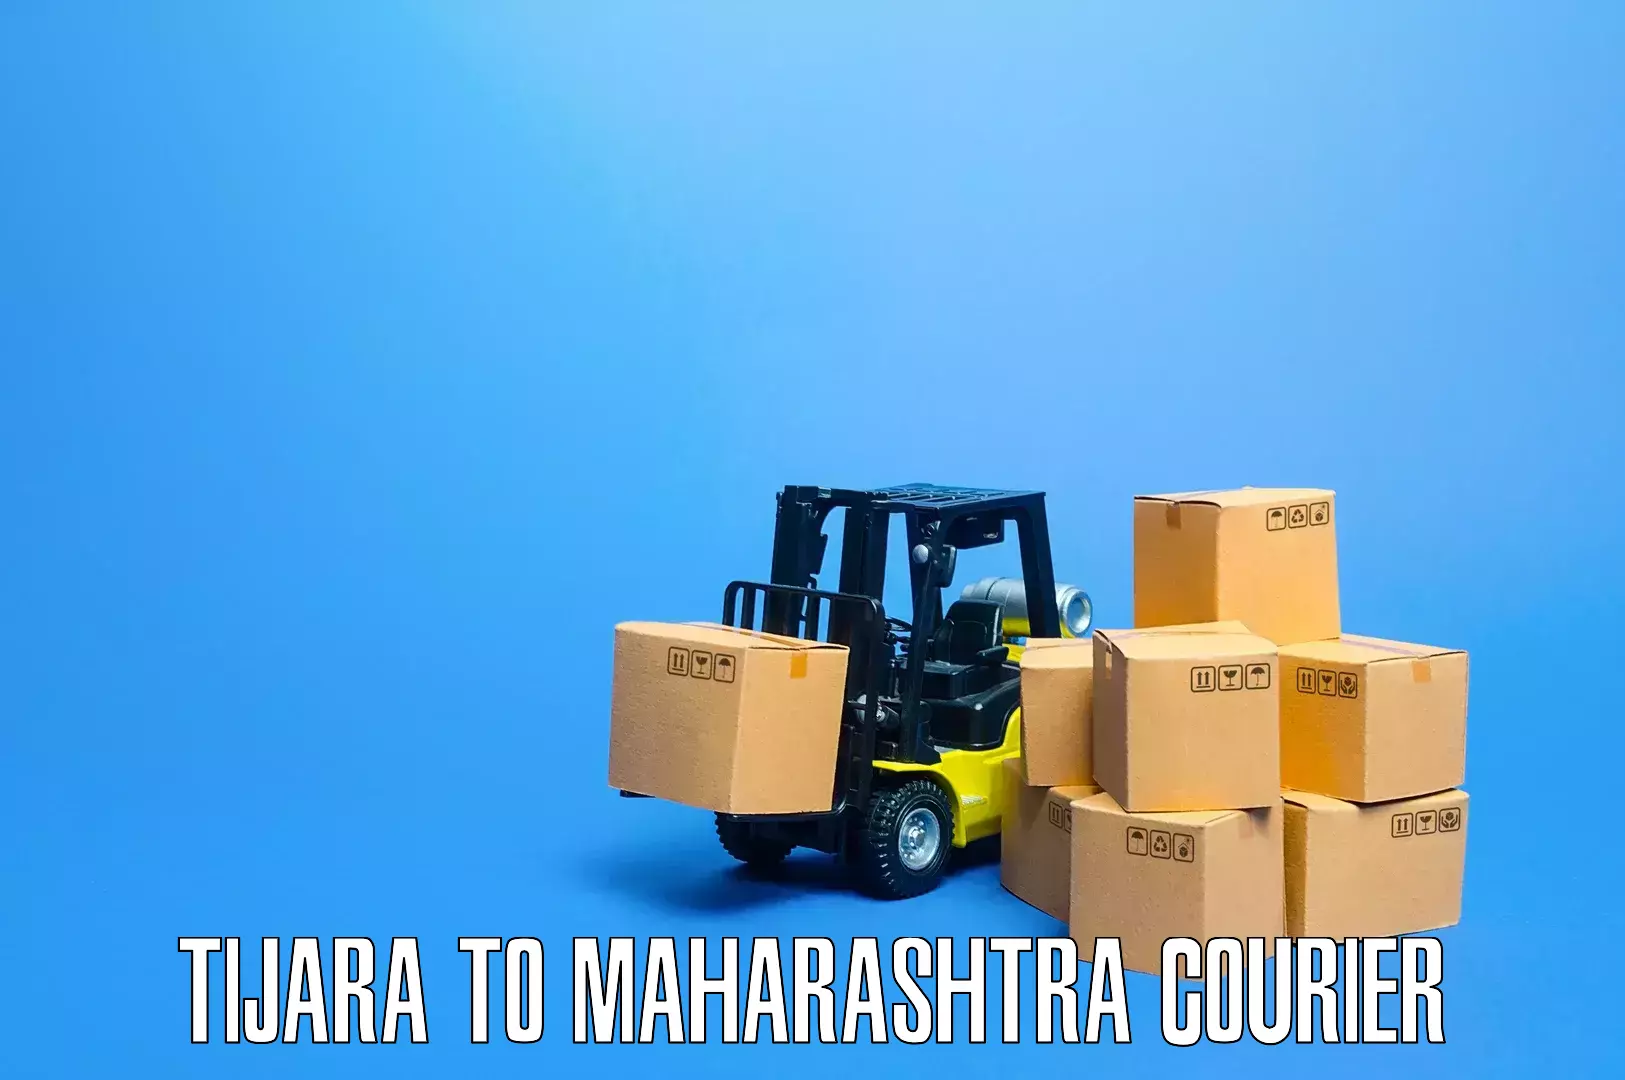 Skilled furniture movers Tijara to Maharashtra